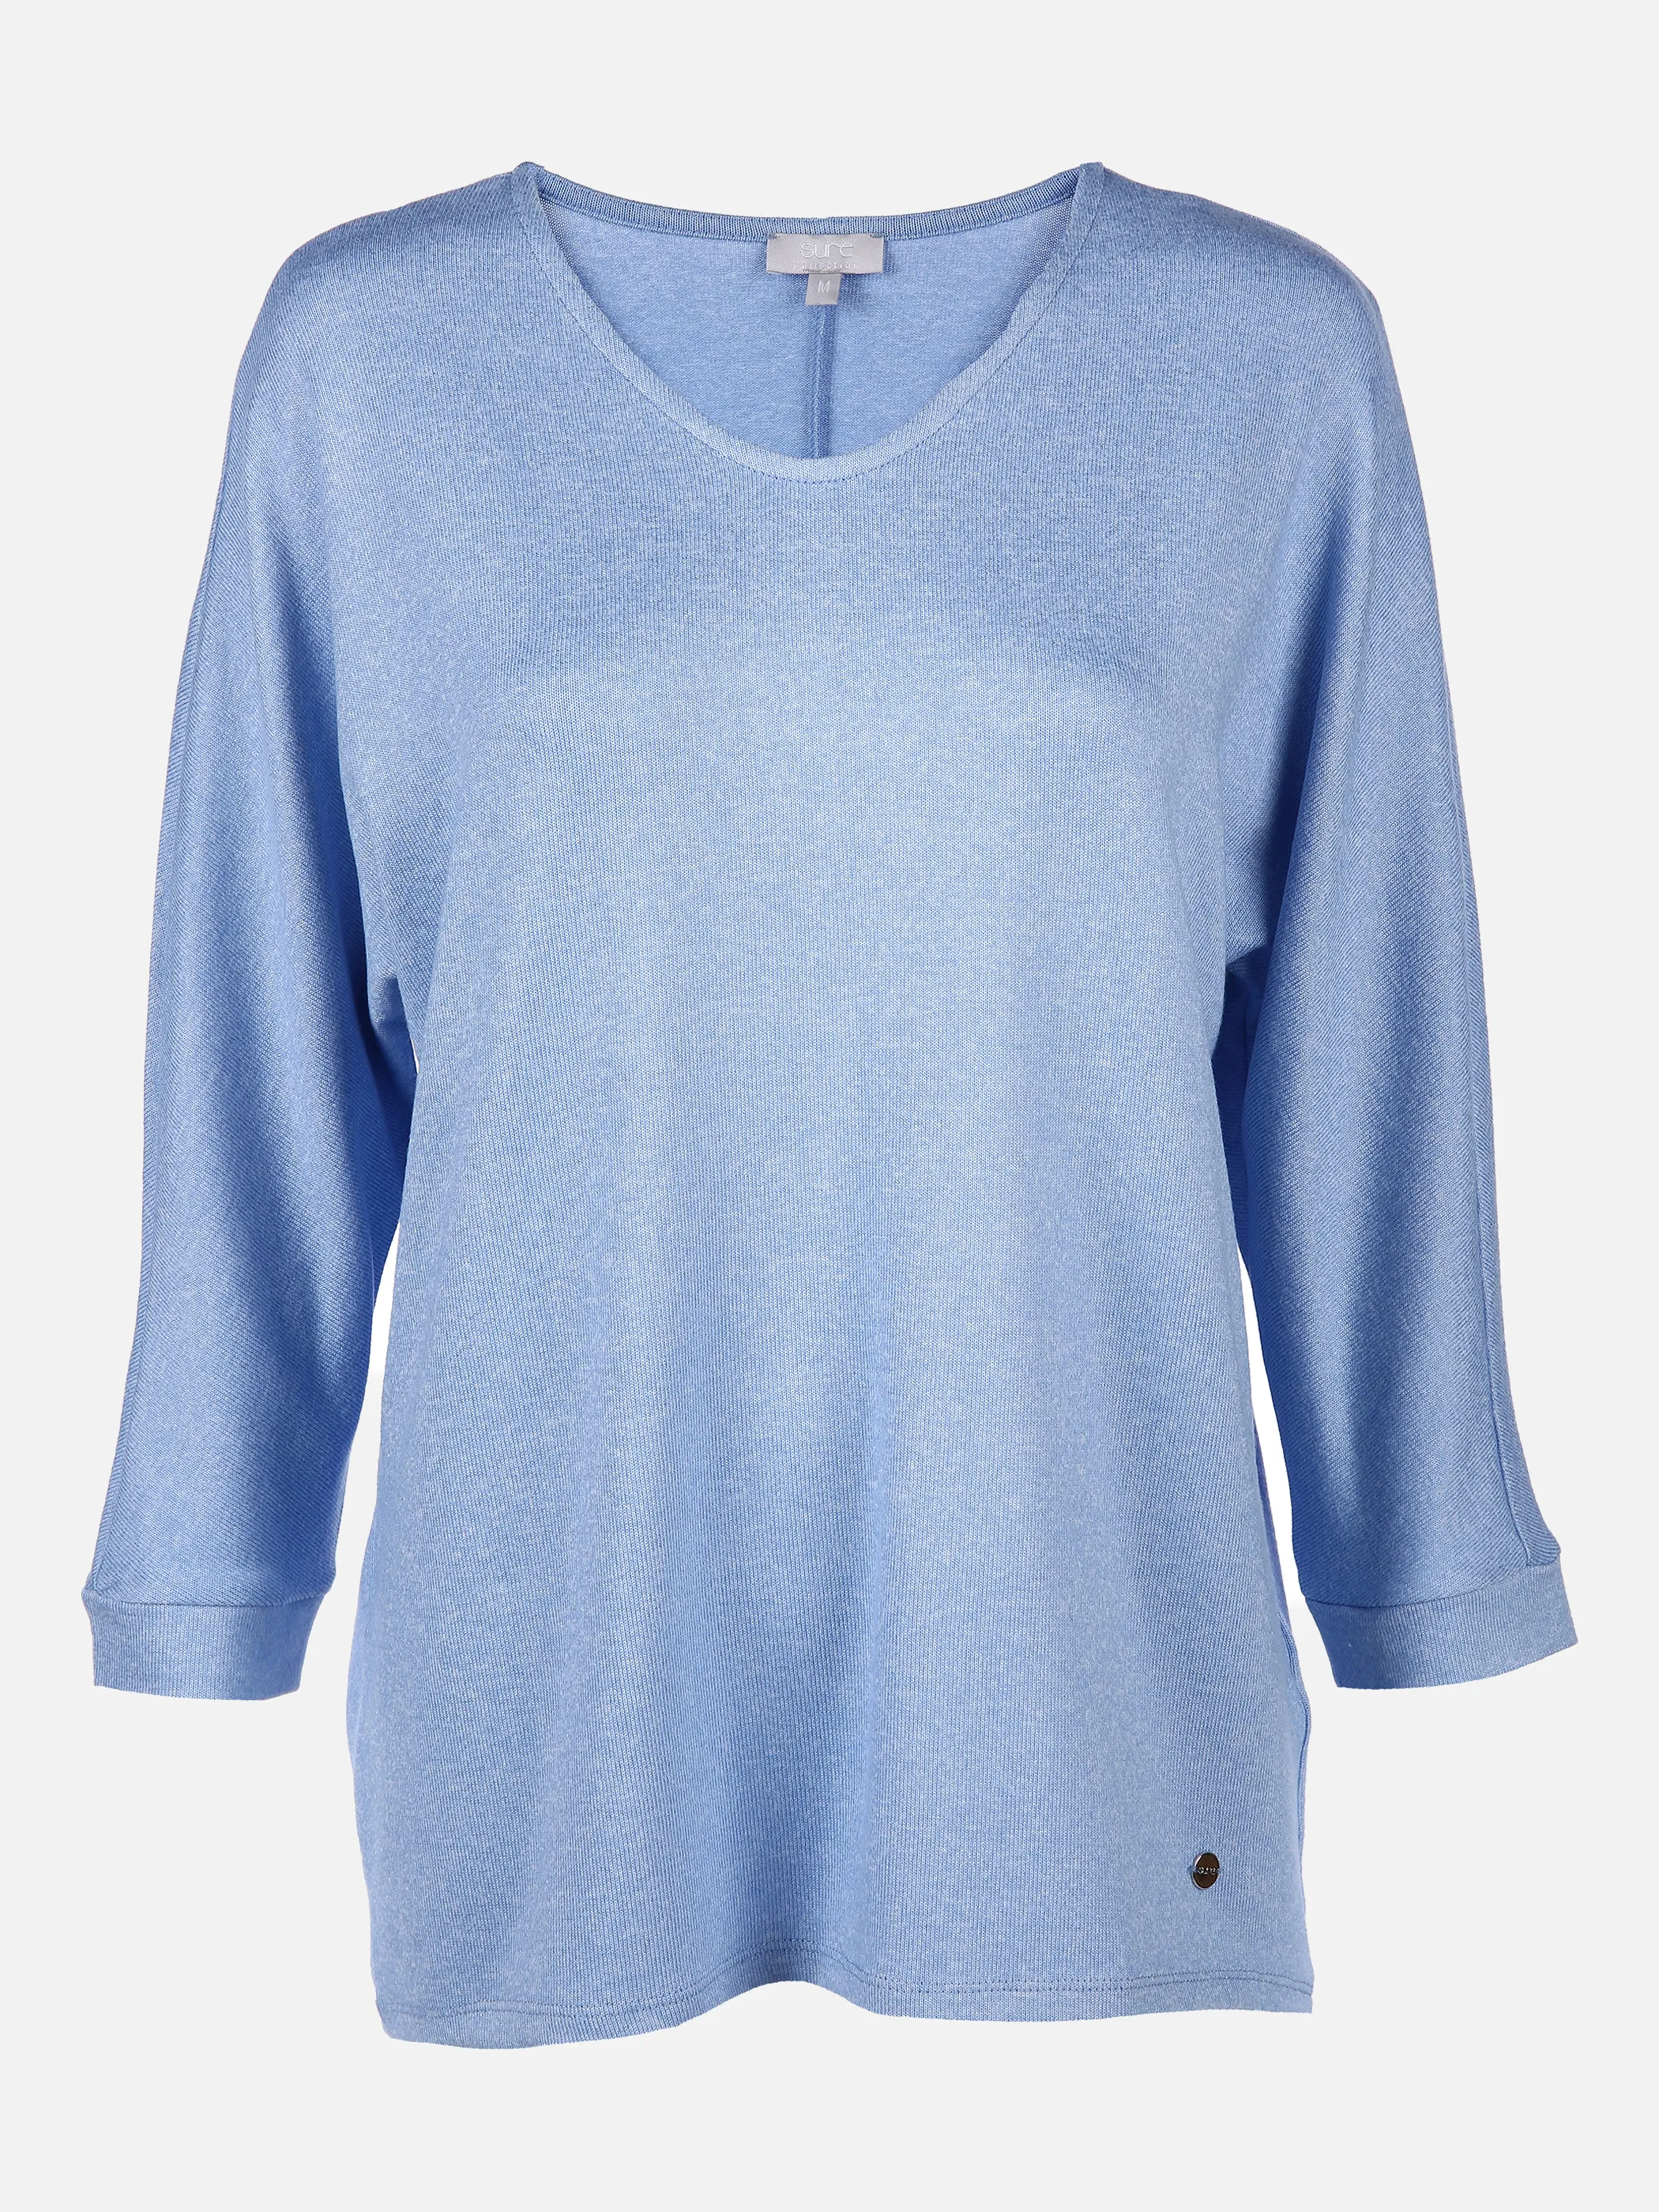 SURE Collection Da-Sweatshirt in Strickoptik Blau 834575 MID BLUE 1